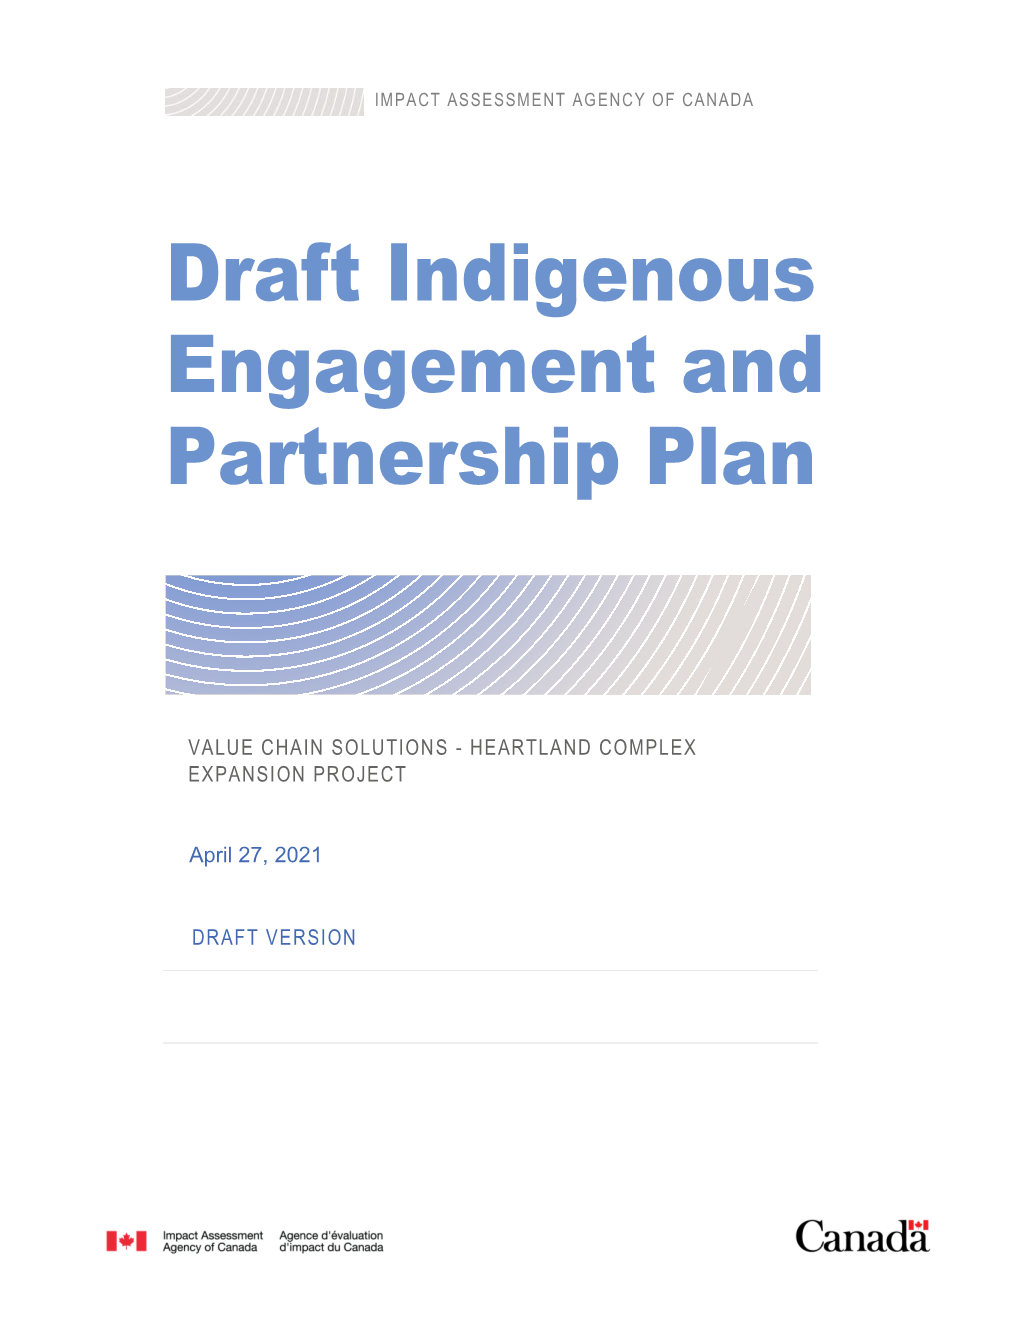 Draft Indigenous Engagement and Partnership Plan